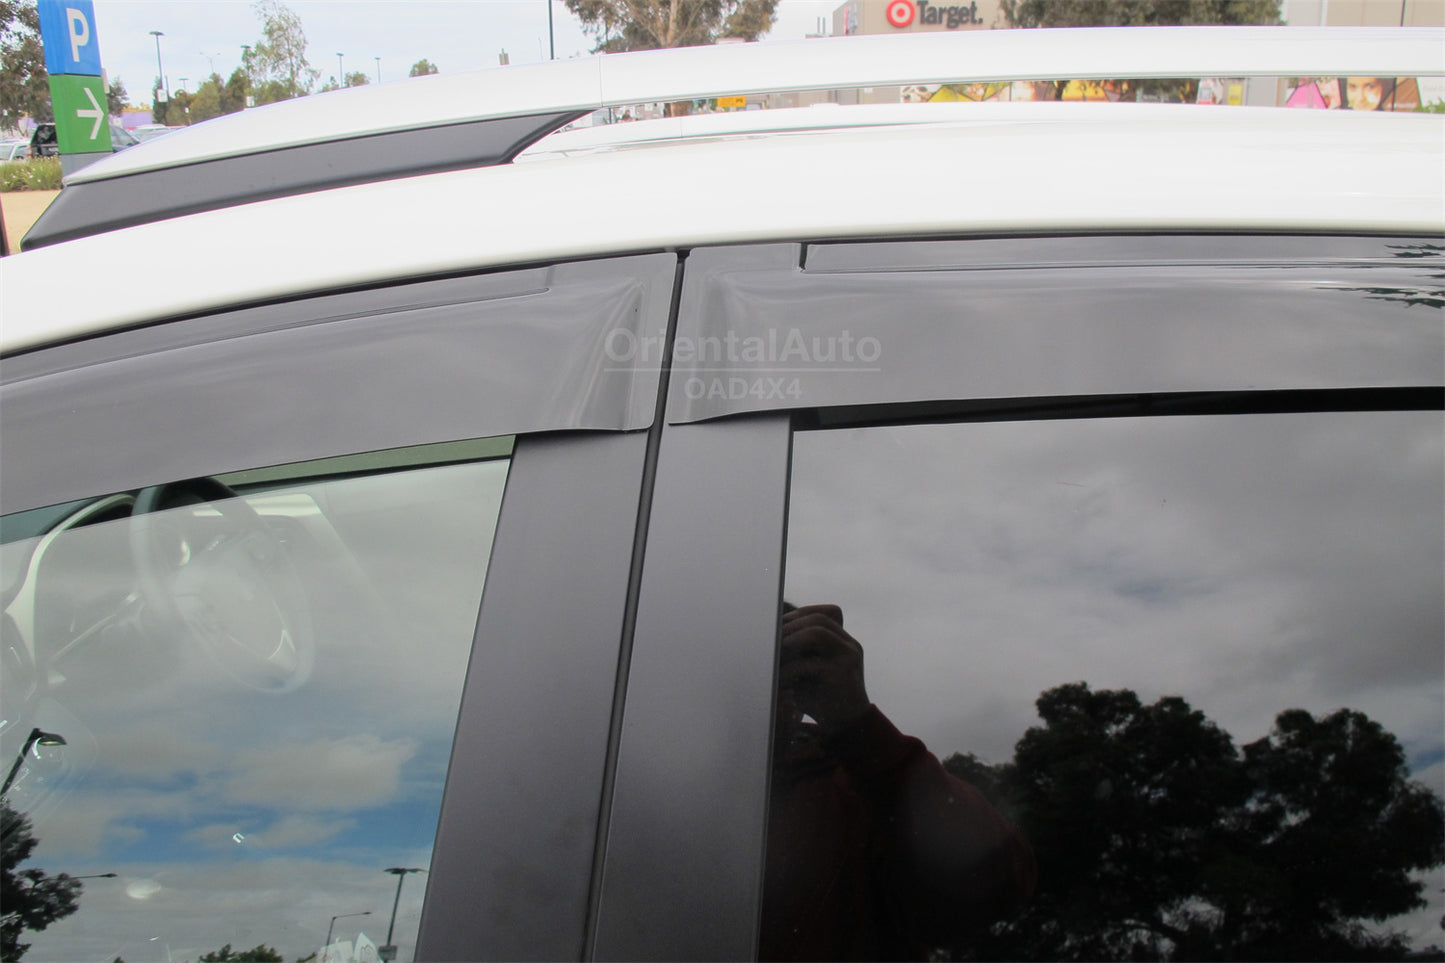 Premium Weathershields Weather Shields Window Visor For Toyota RAV4 2013-2019